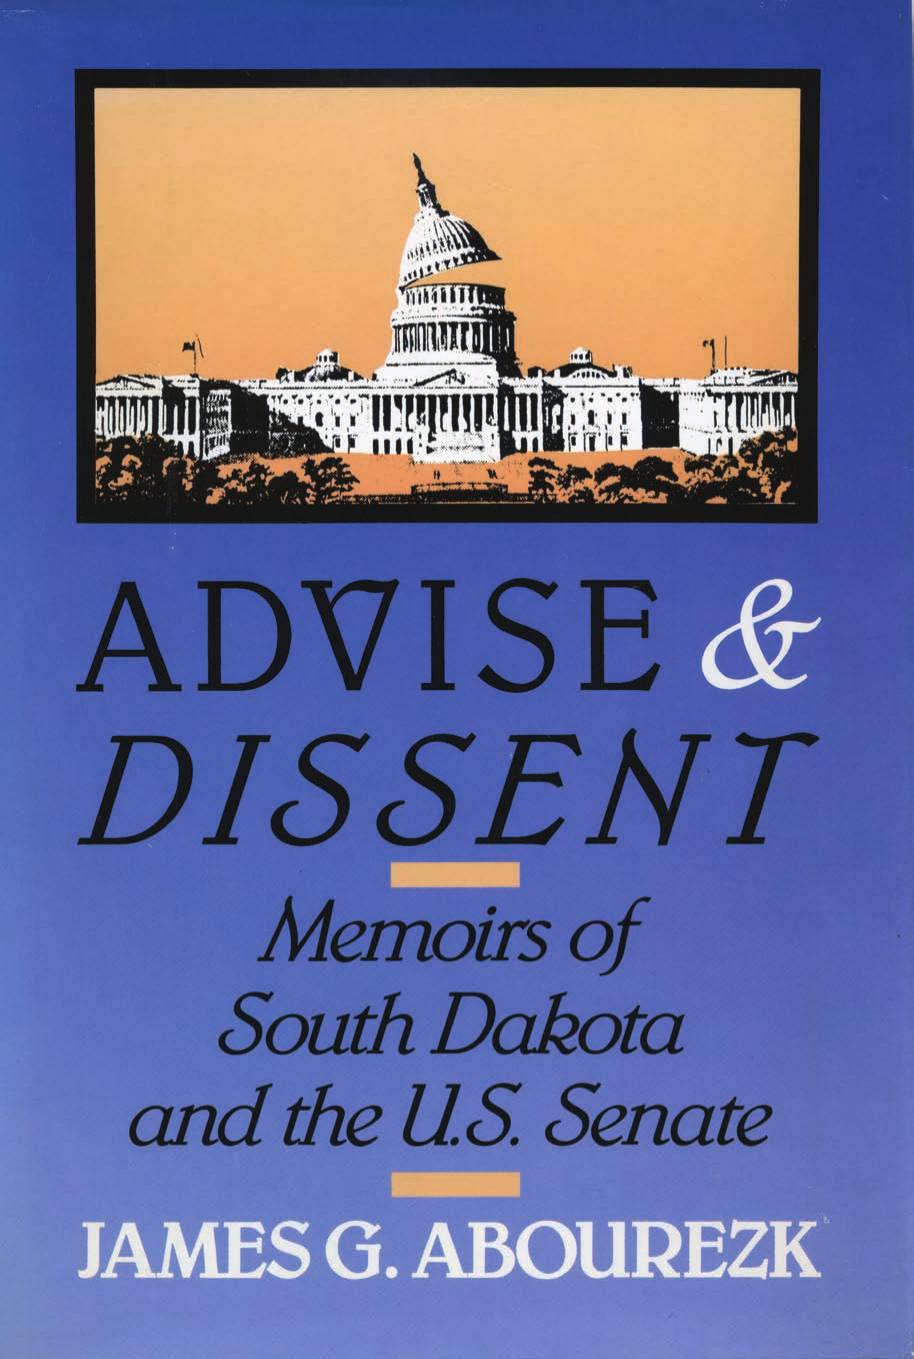 Advise & Dissent : Memoirs of South Dakota and the U.S. Senate by James Abourezk